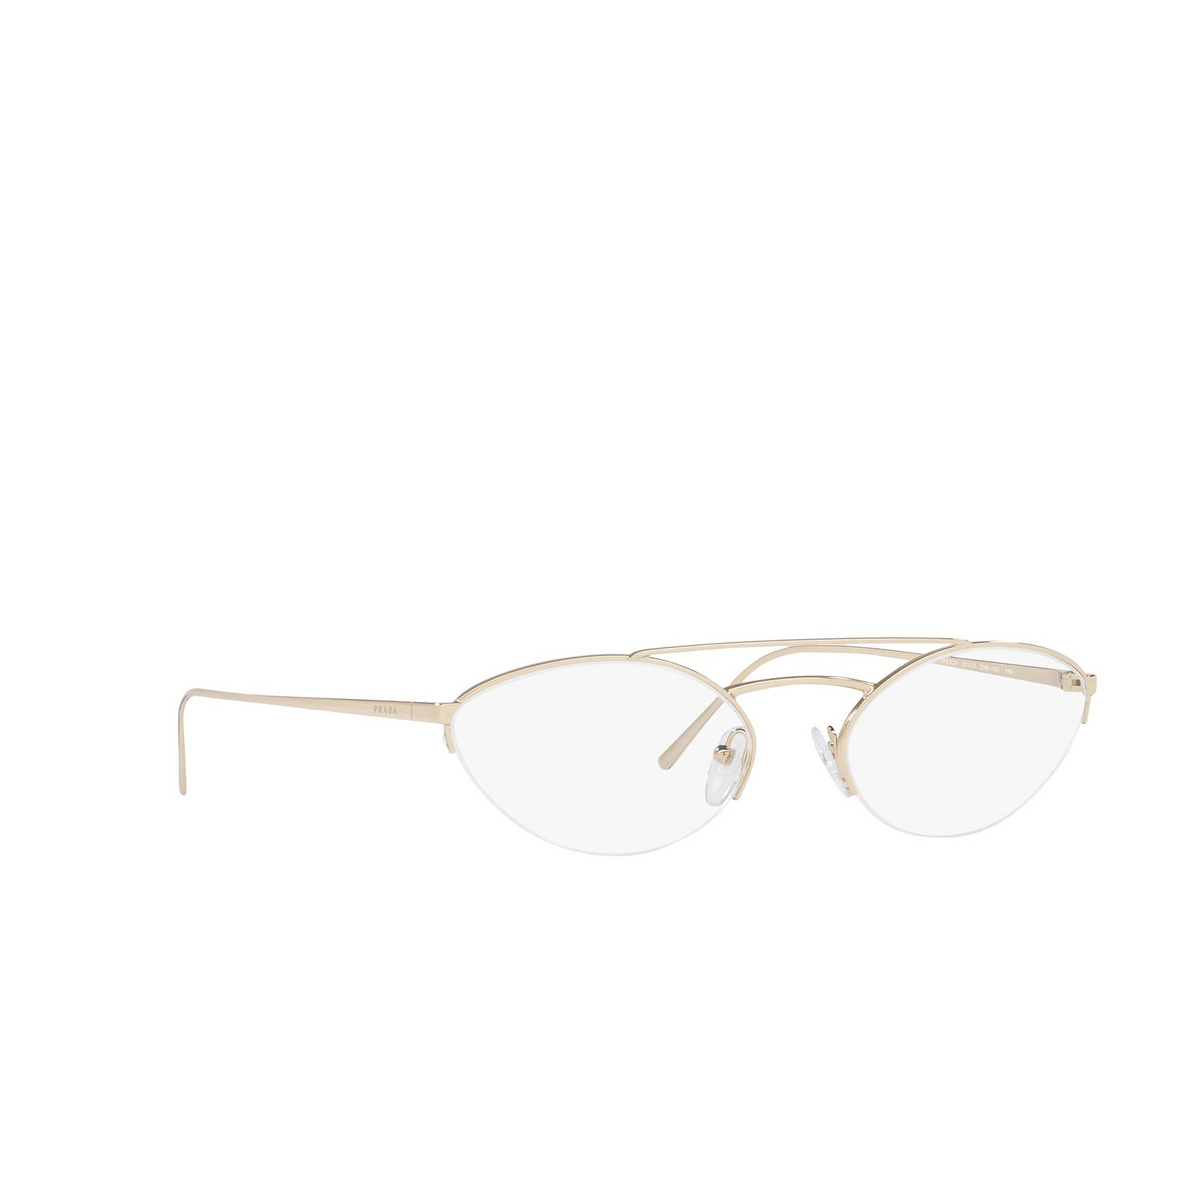 Prada® Oval Eyeglasses: Catwalk PR 62VV color Pale Gold ZVN1O1 - three-quarters view.